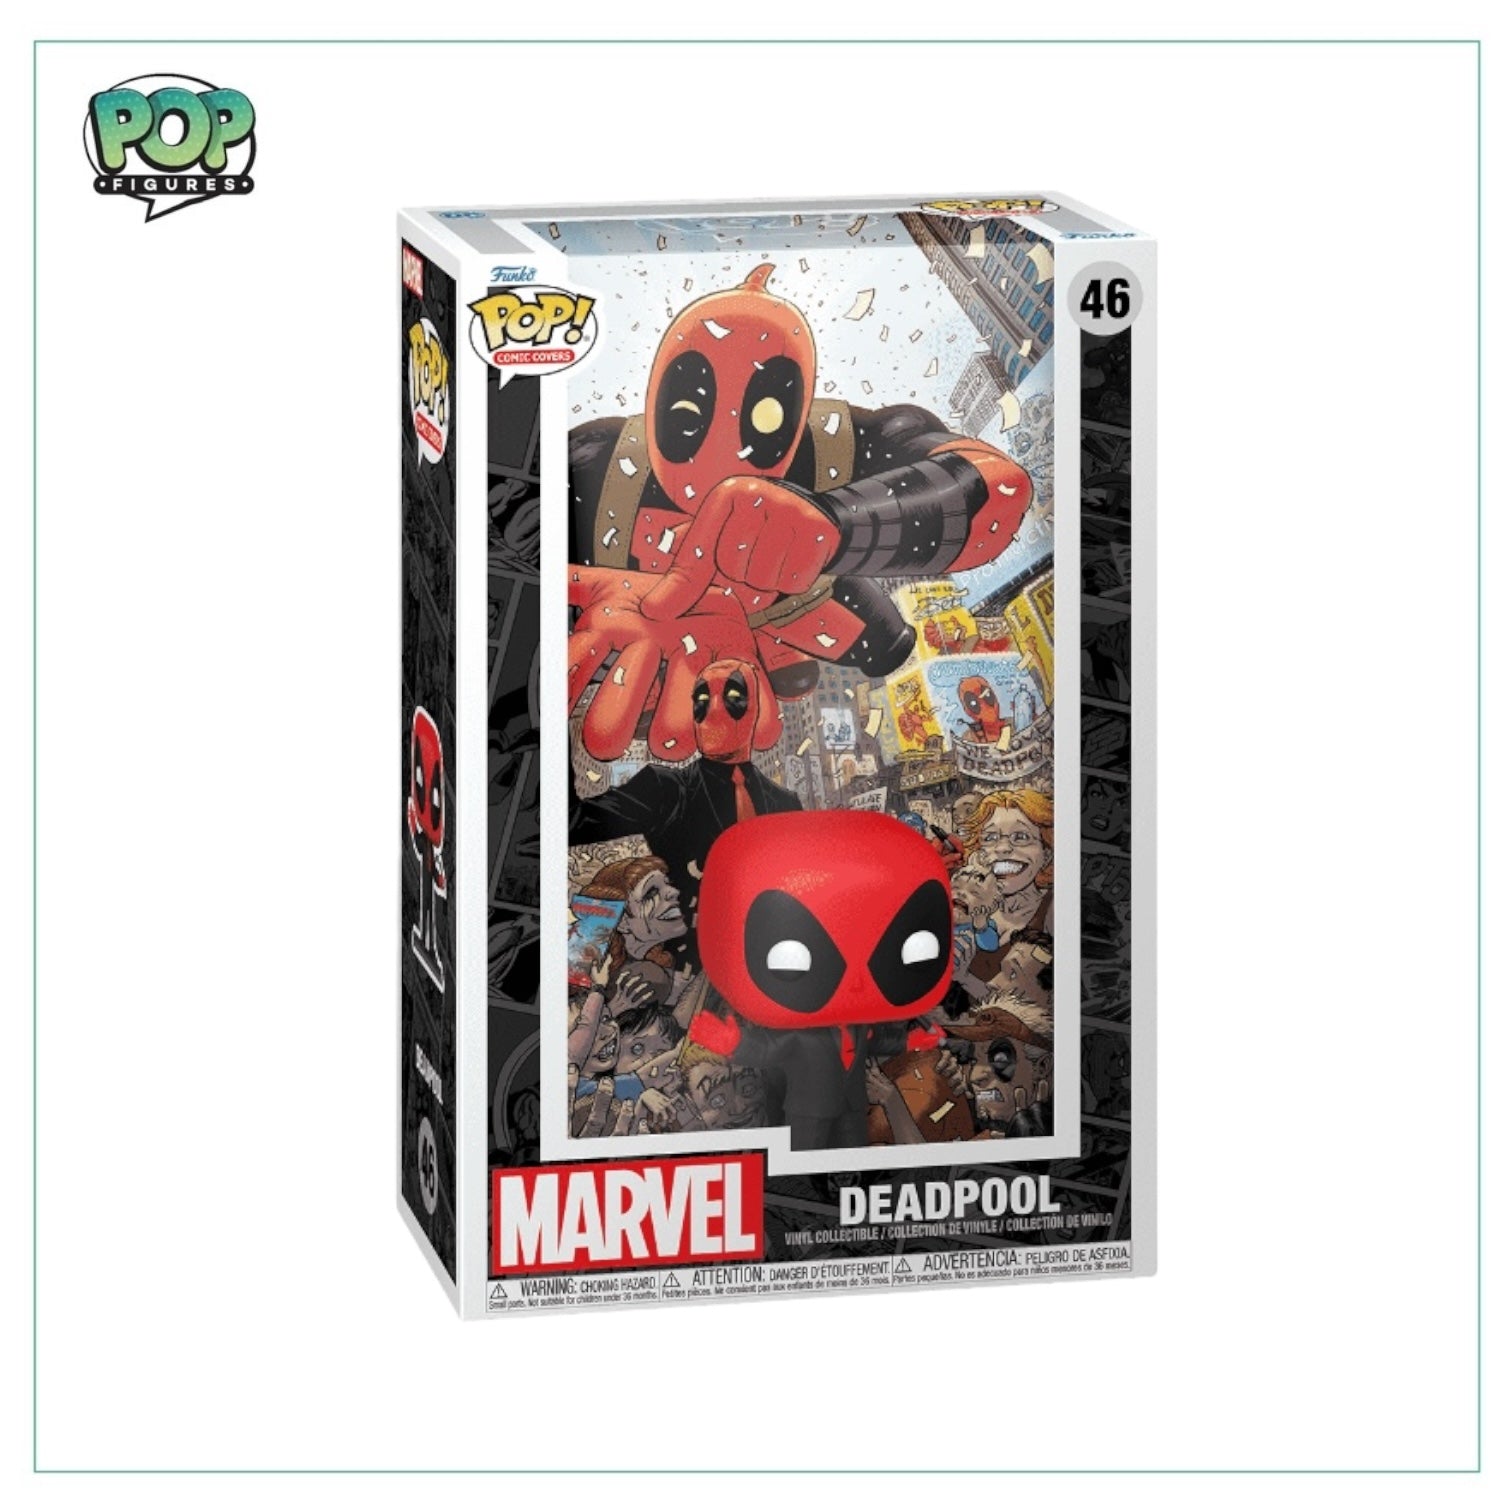 Deadpool in Black Suit #46 Funko Comic Pop! - Deadpool